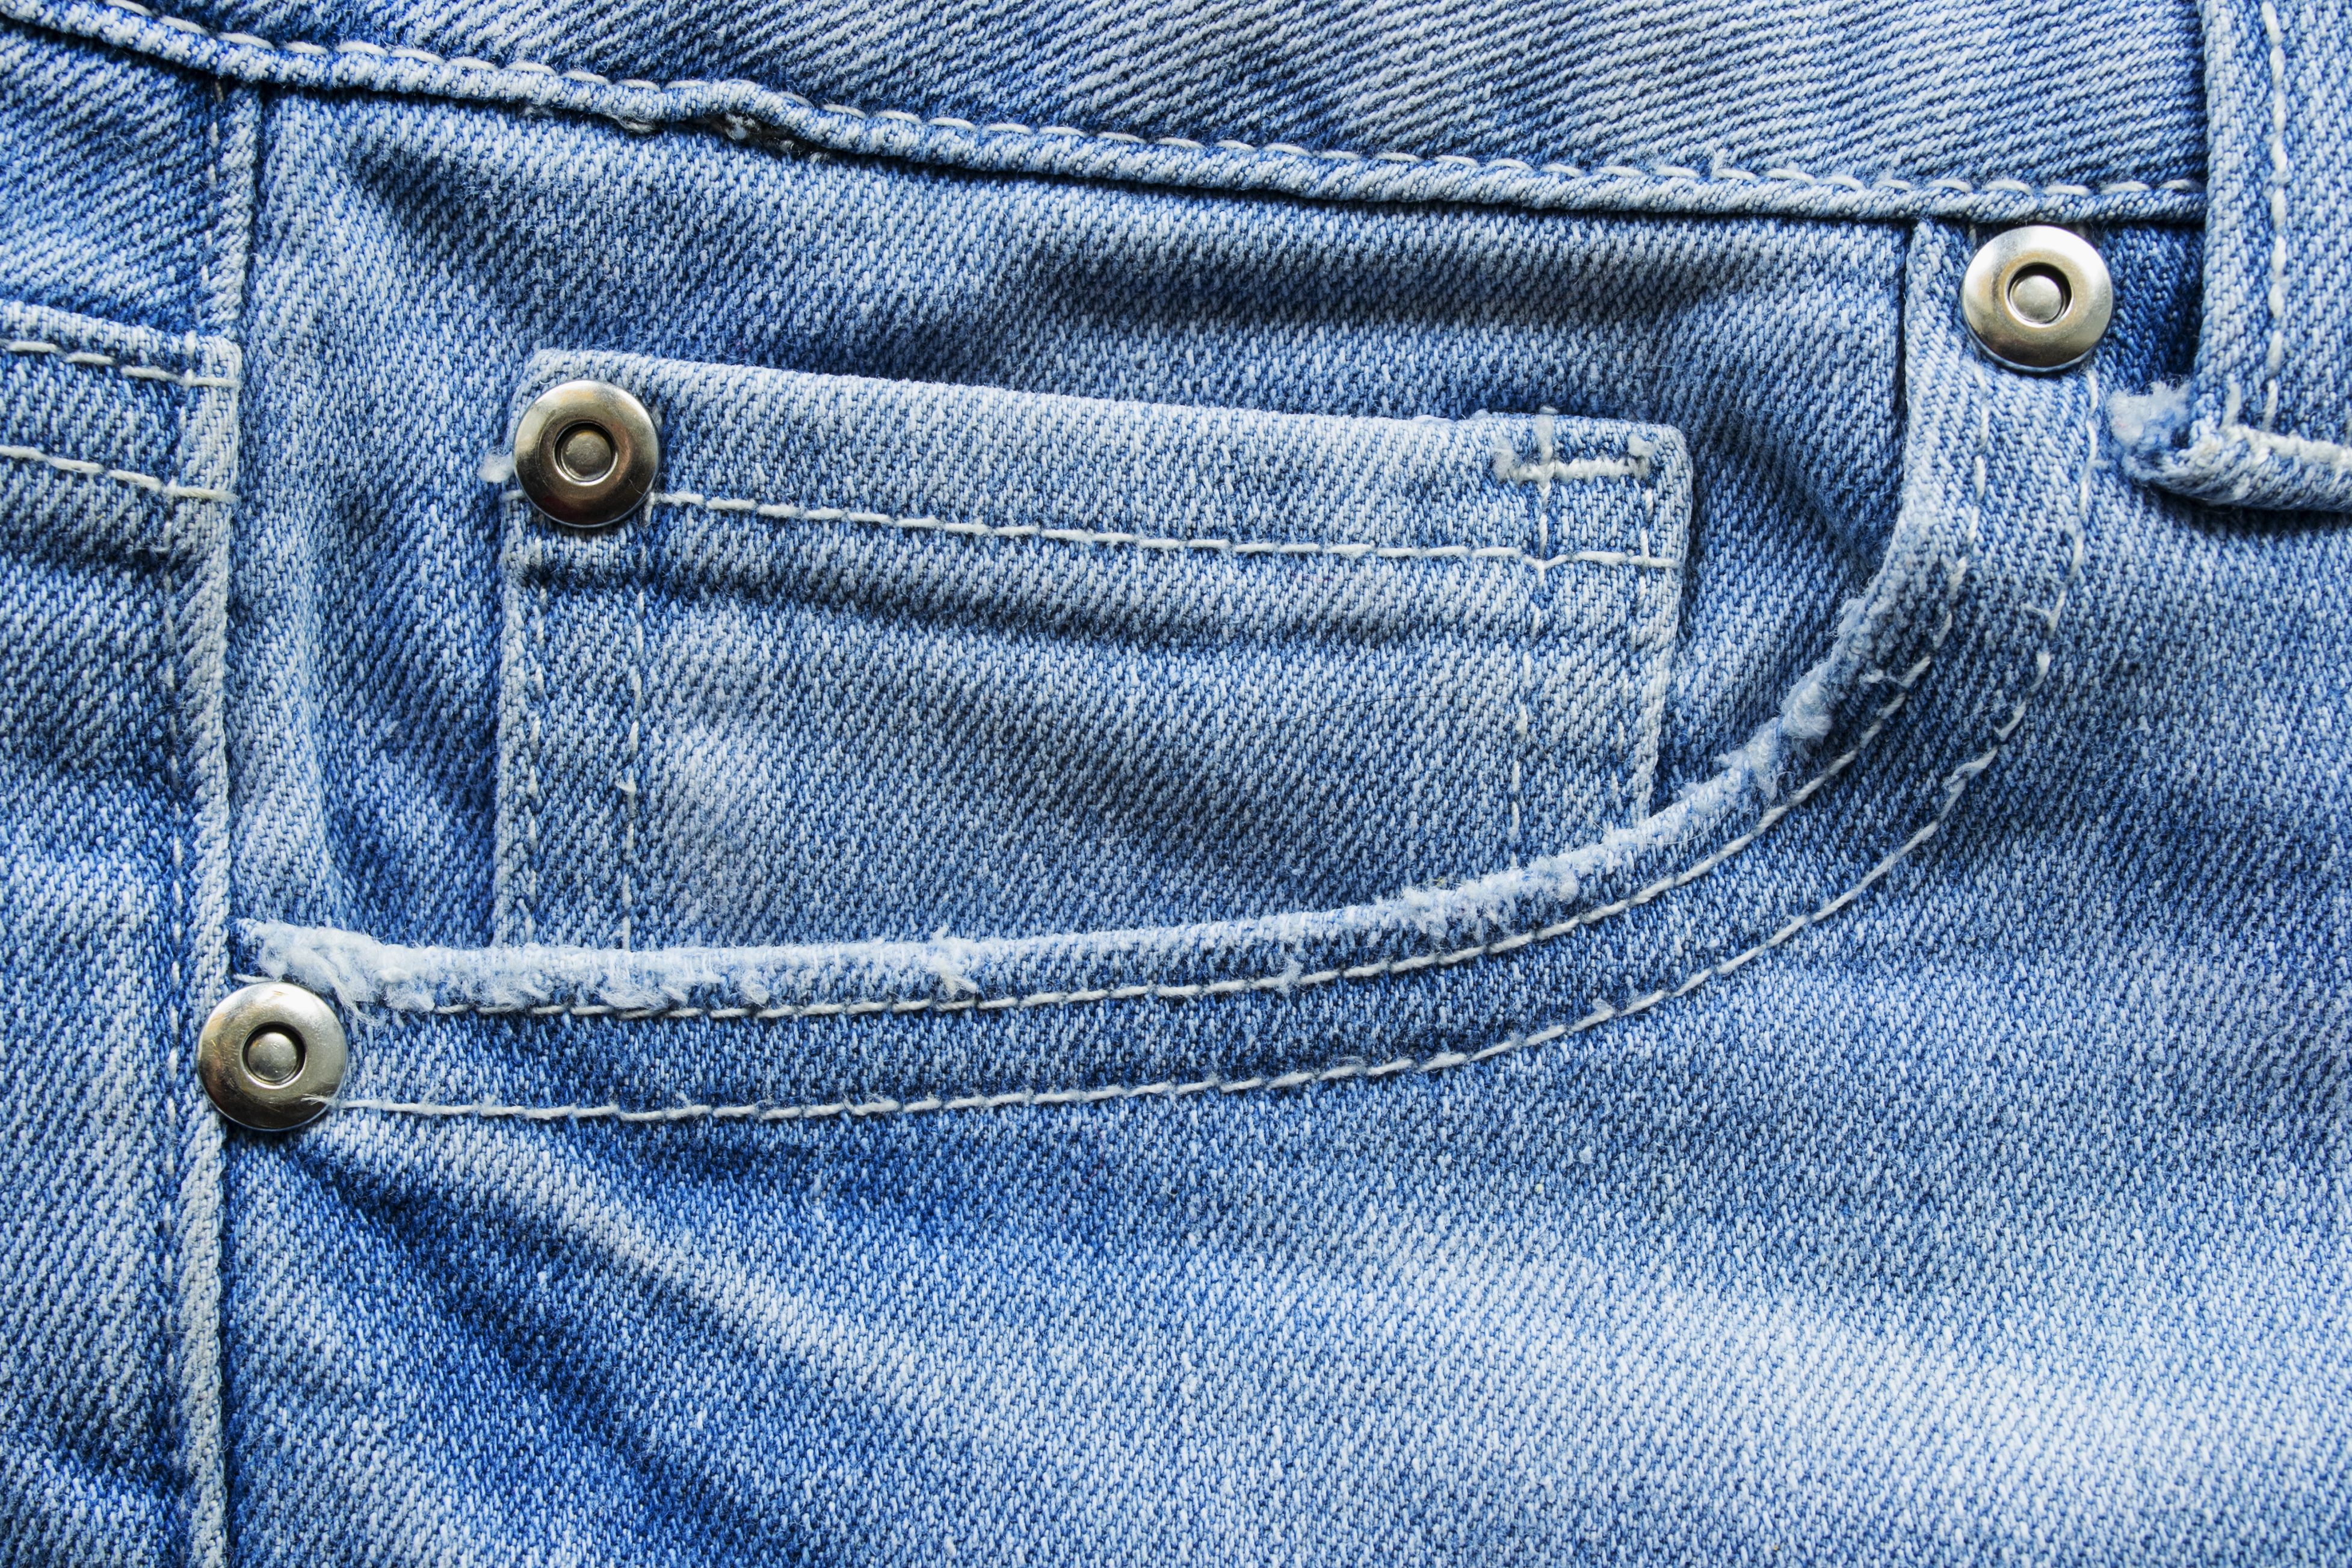 Metal Clothes Accessories, Metal Jeans Button Pants